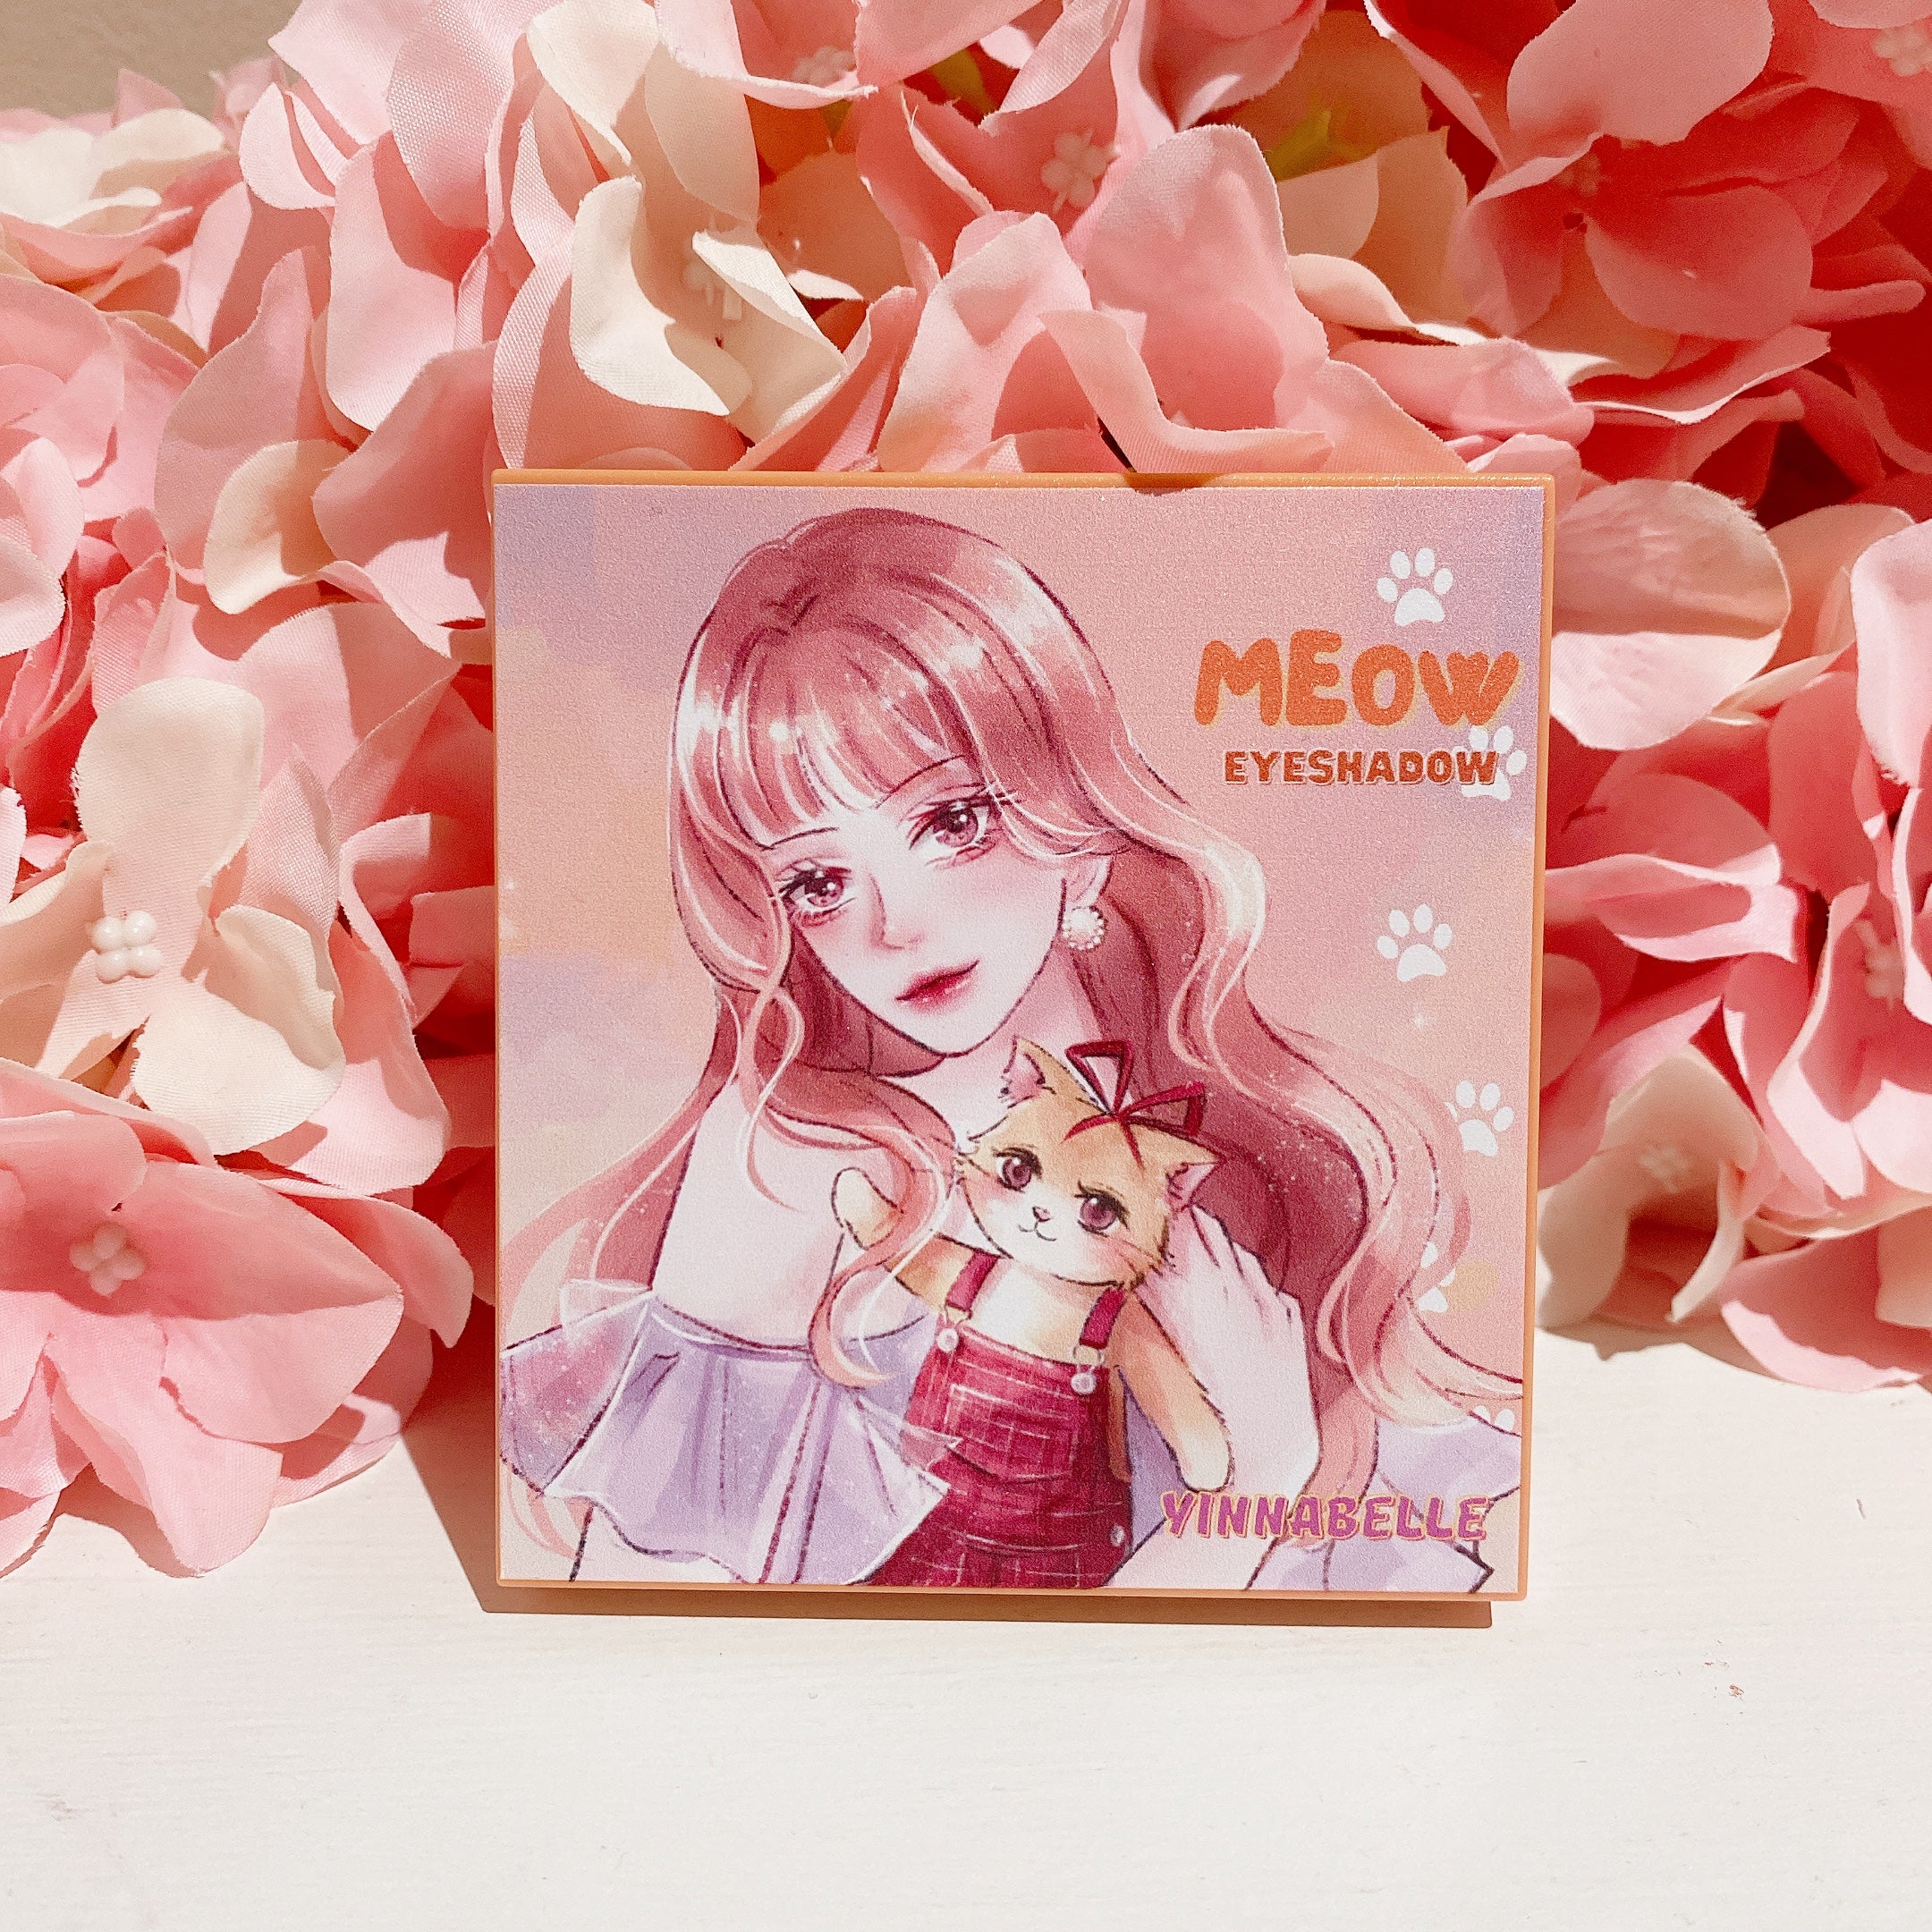 Meow Anime Girl 9 color Warm tones Eyeshadow palette